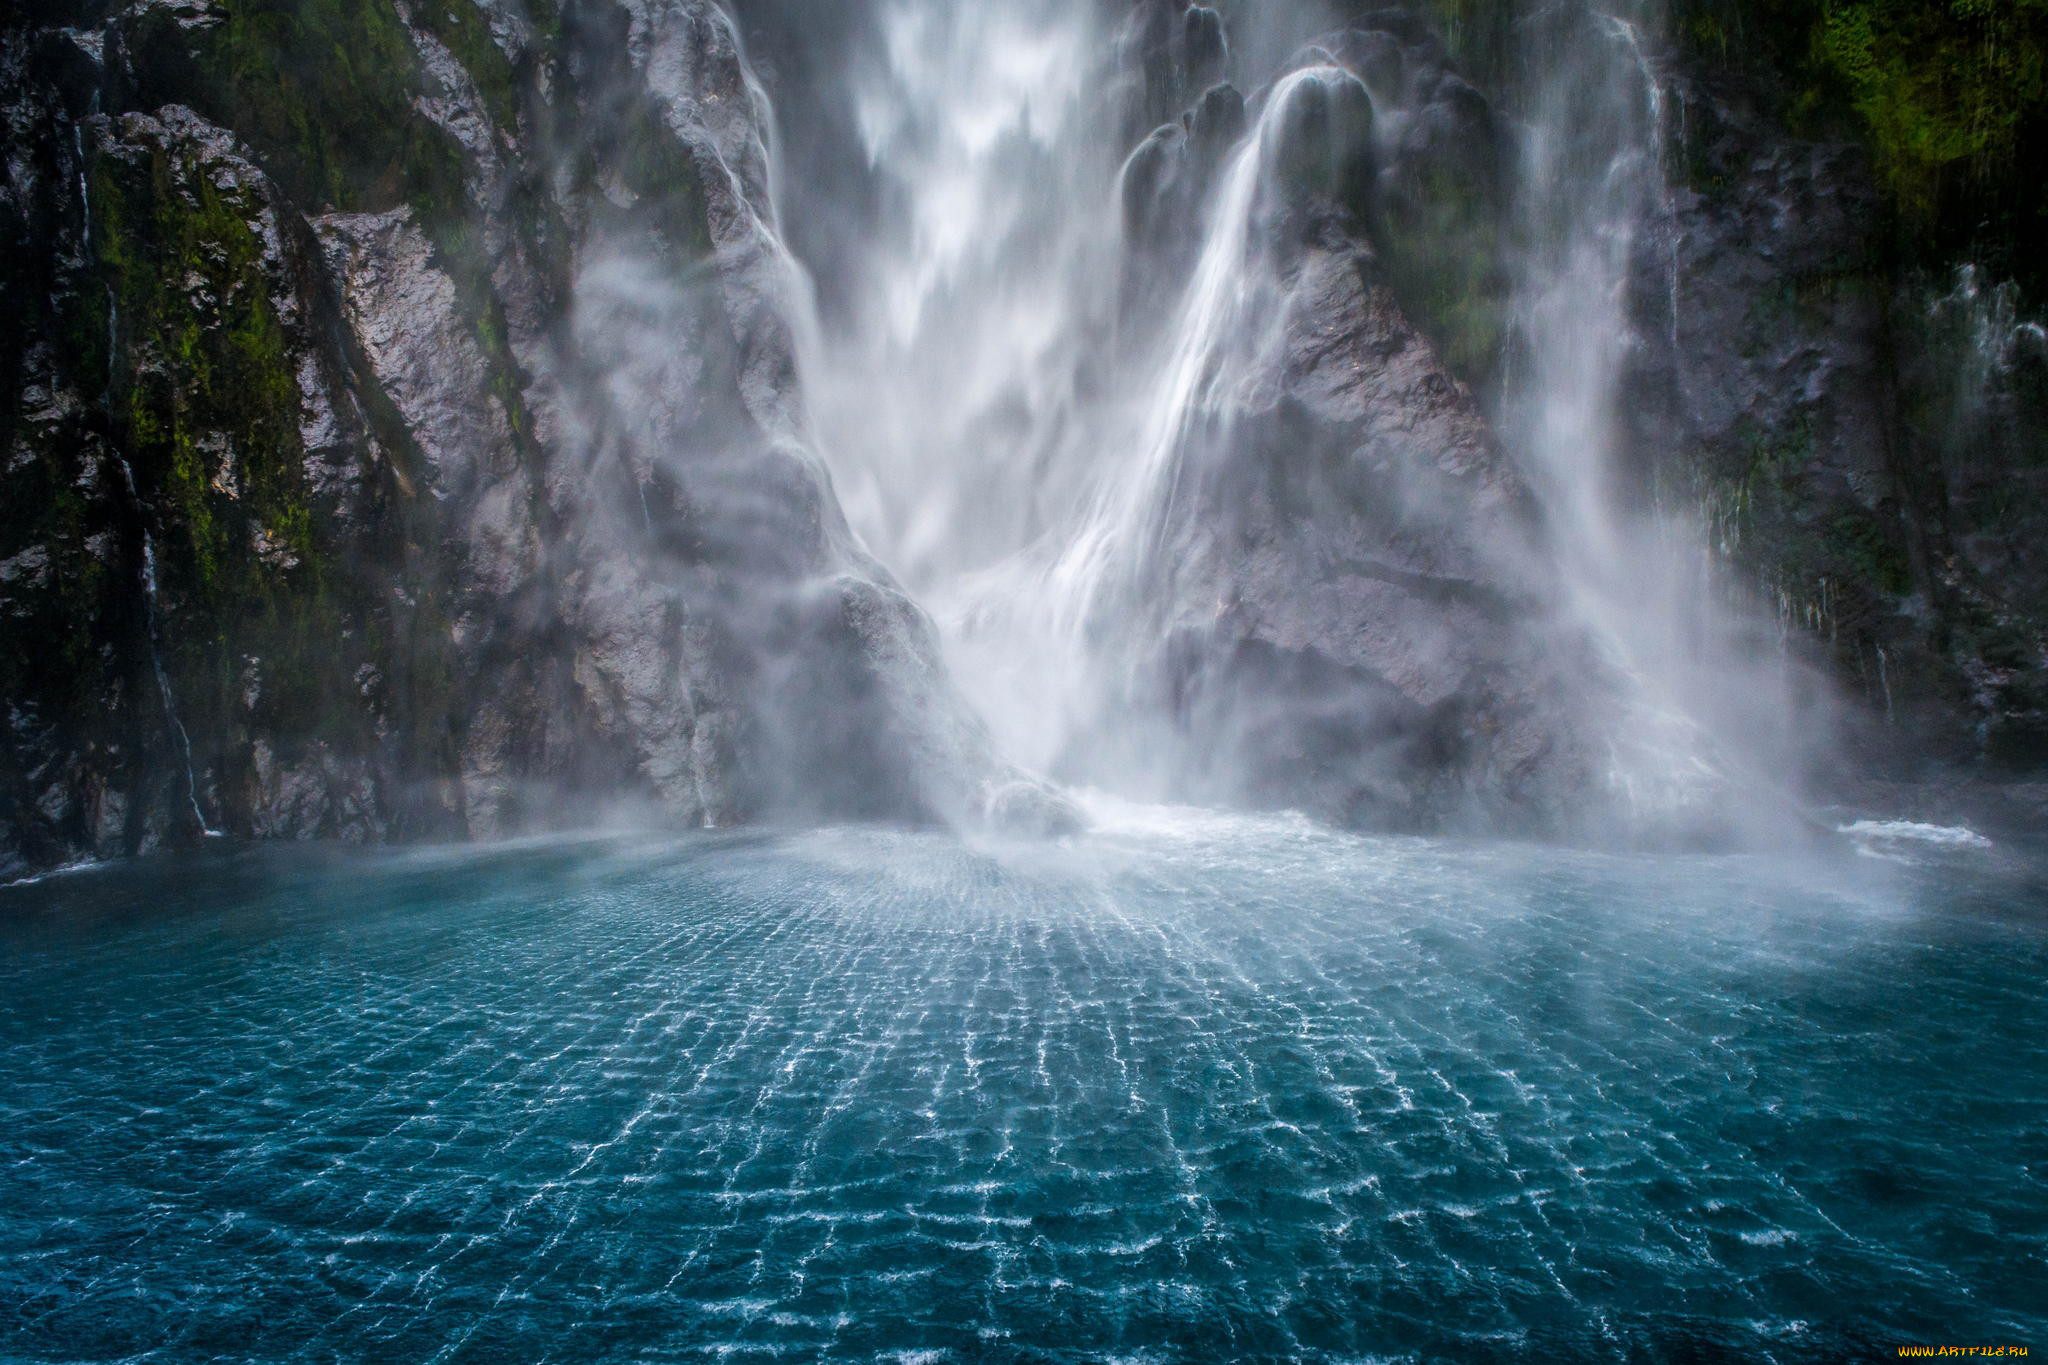 Картинки. Водопад « голубая Лагуна» ( г.холм). Милфорд саунд обратные водопады. Водопад Фэнго. Водопад Нгалиема.